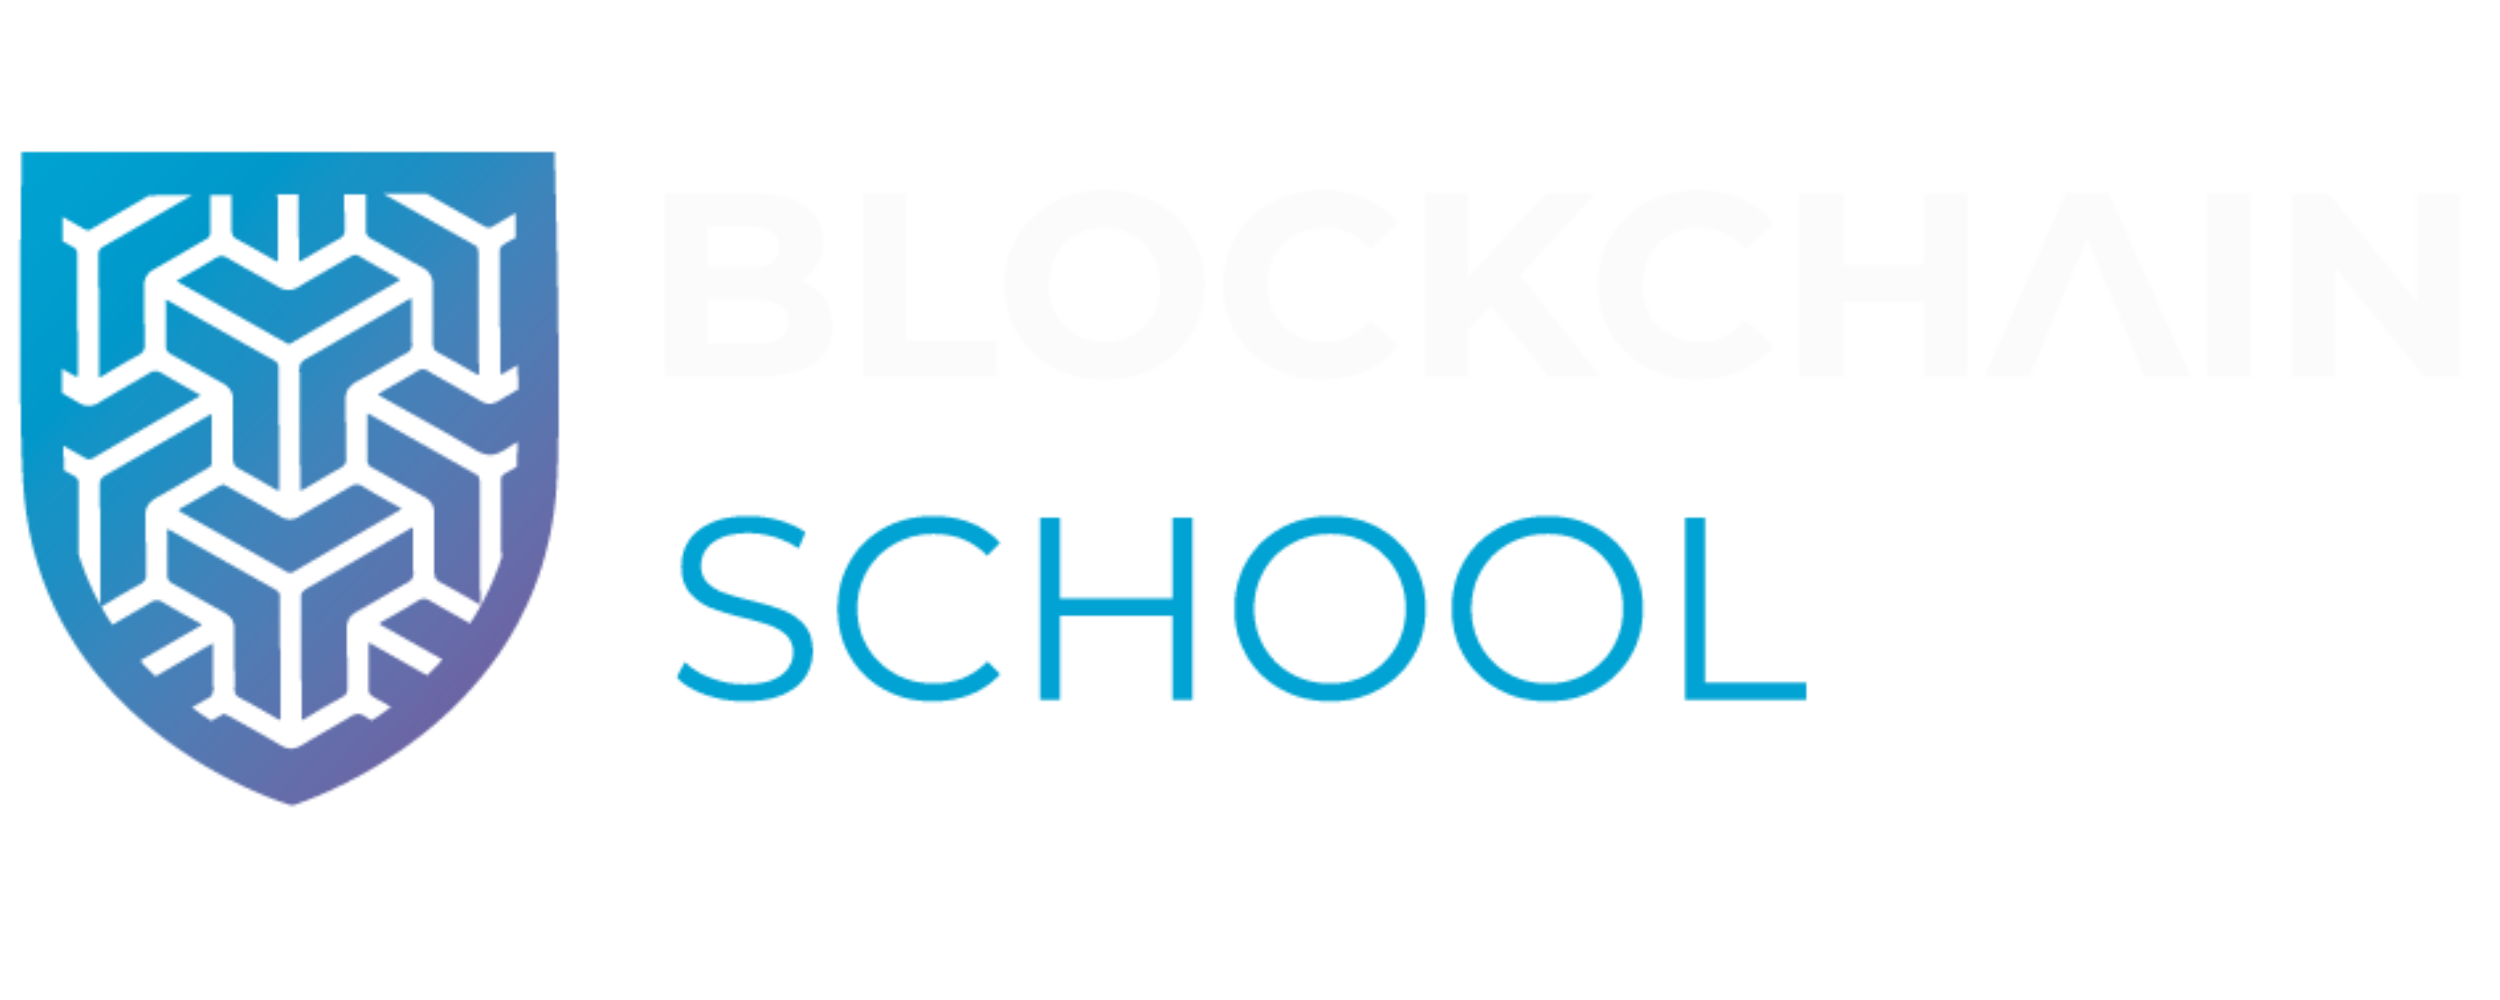 blockchainschool_blanco